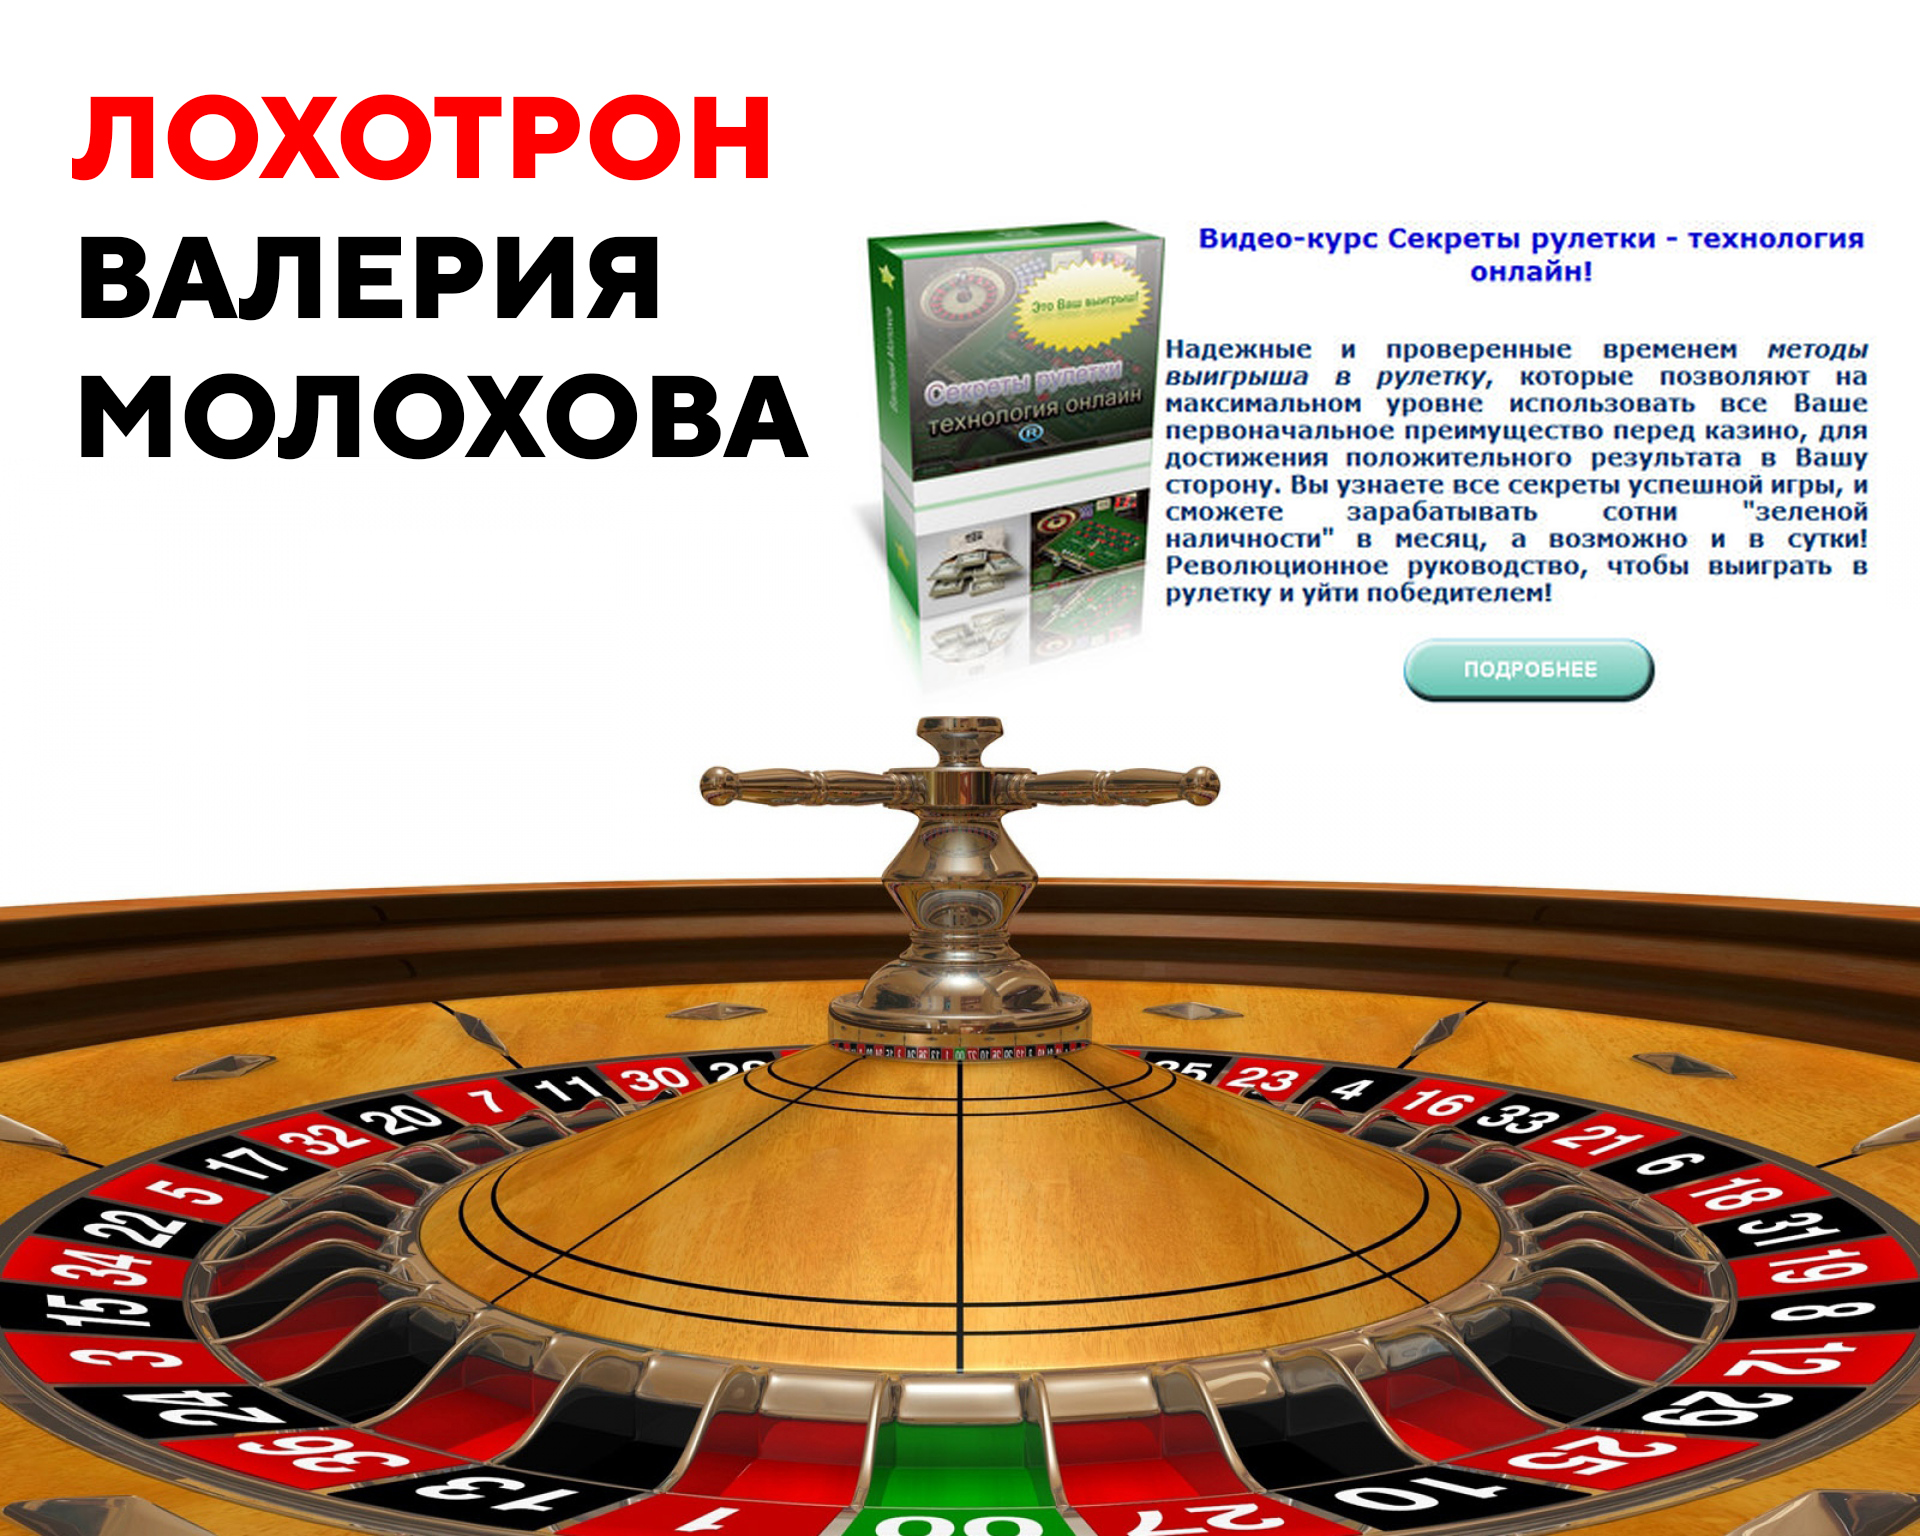 Молохов секреты рулетки технология онлайн реклама казино музыка